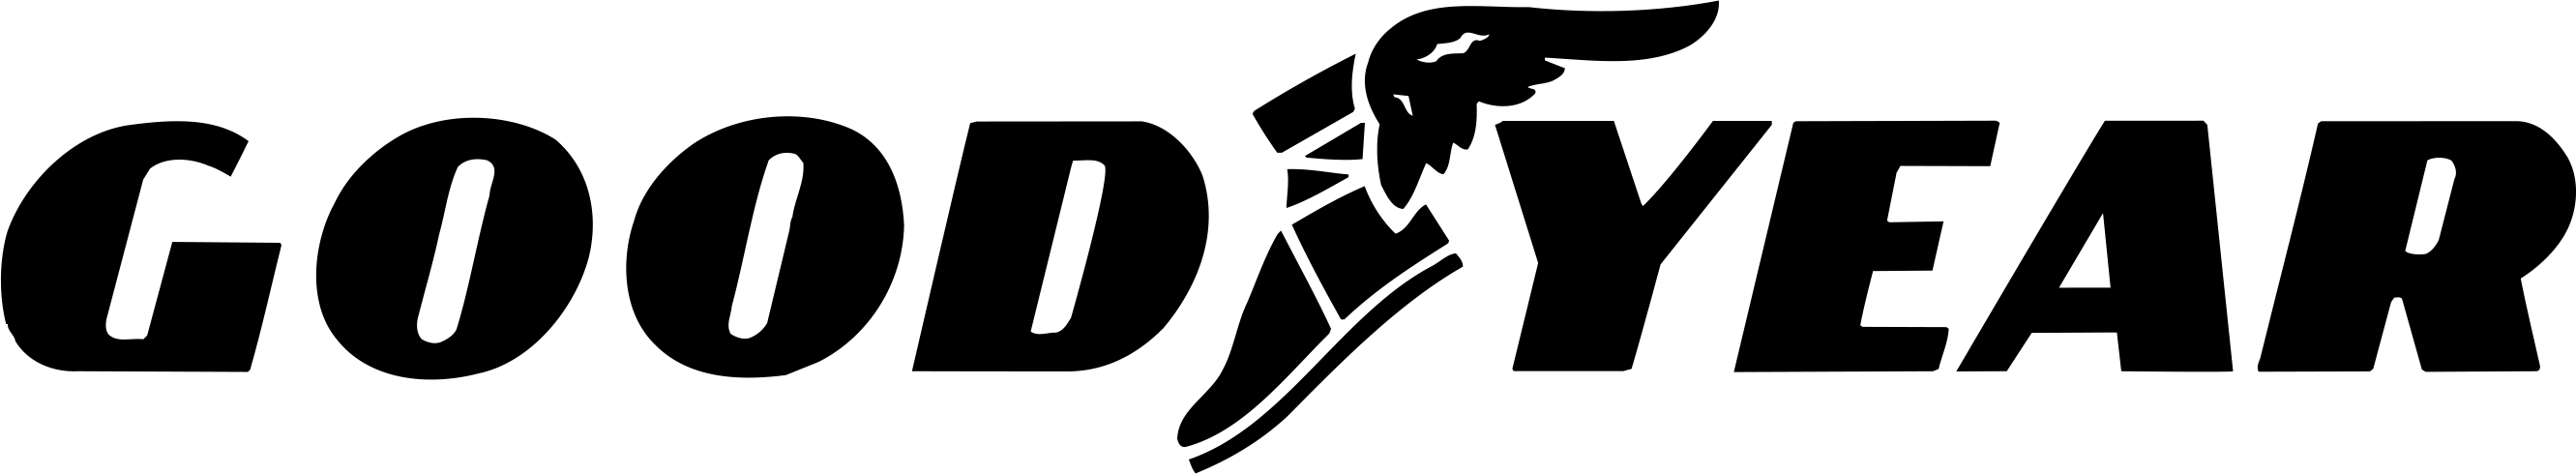 goodyear-logo-vector